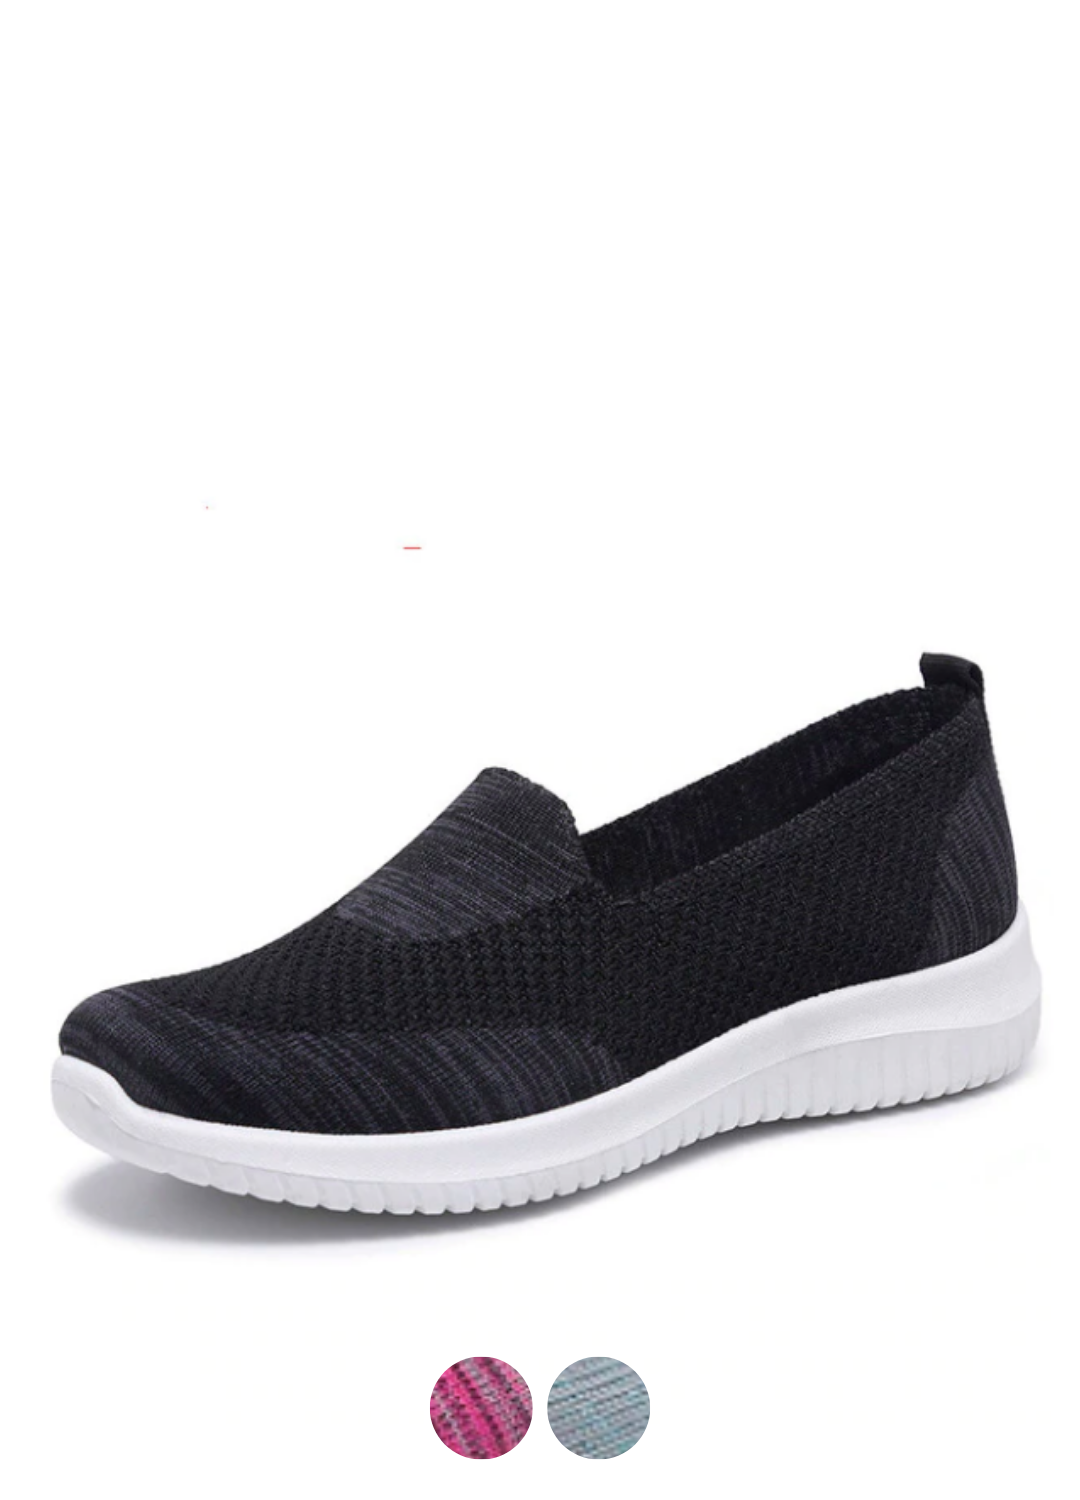 Nubia Women's Slip-On Black Shoes | Ultrasellershoes.com – USS® Shoes